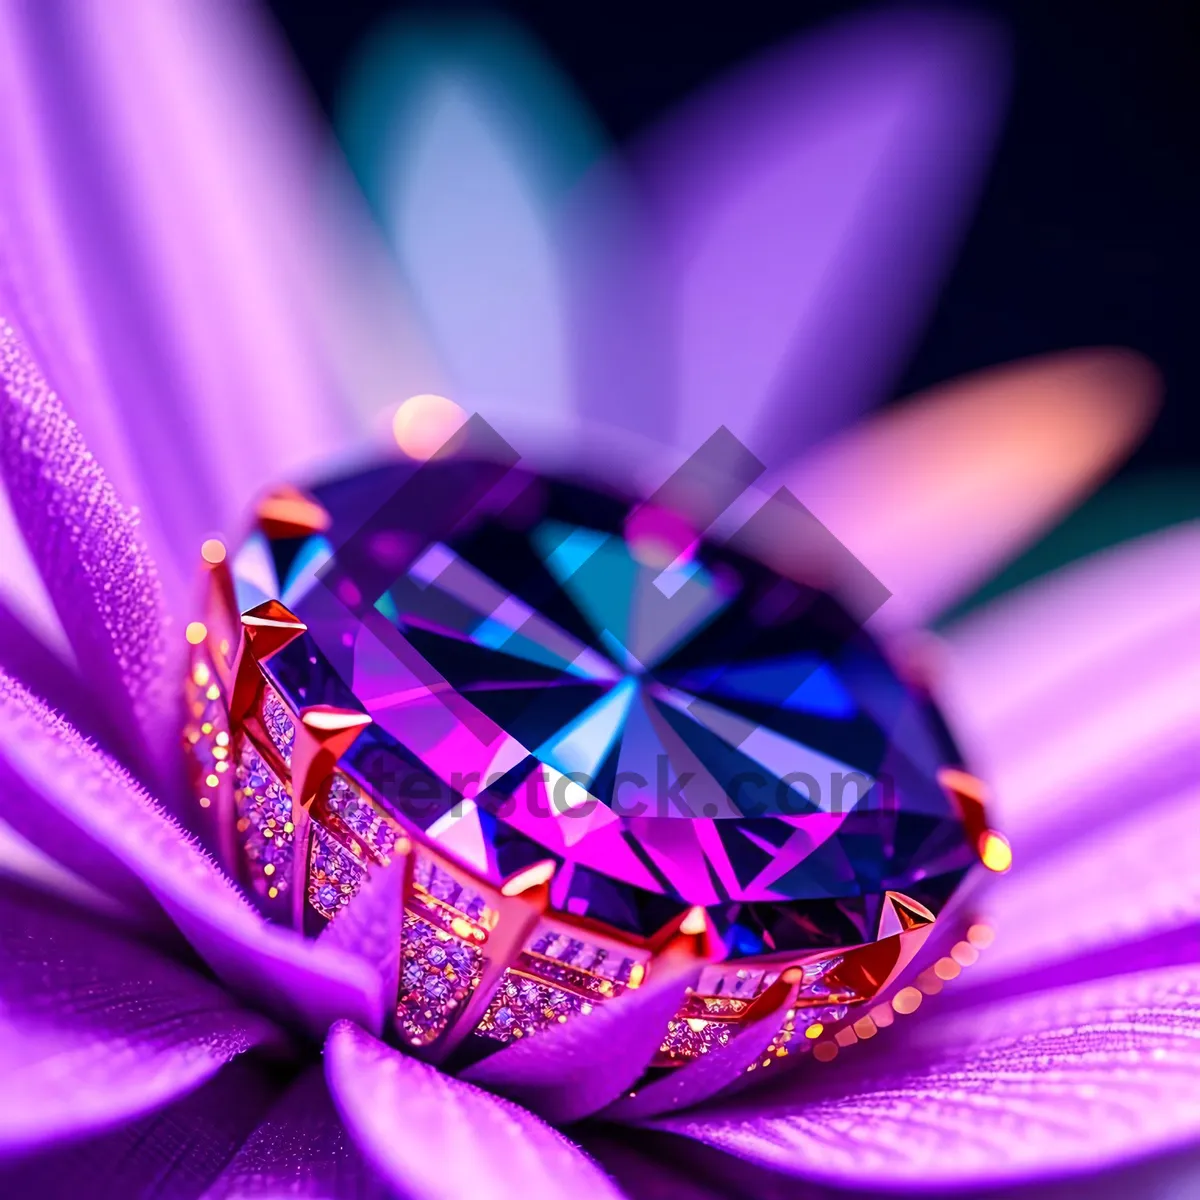 Picture of Colorful Lilac Gem: Vibrant Floral Fractal Art